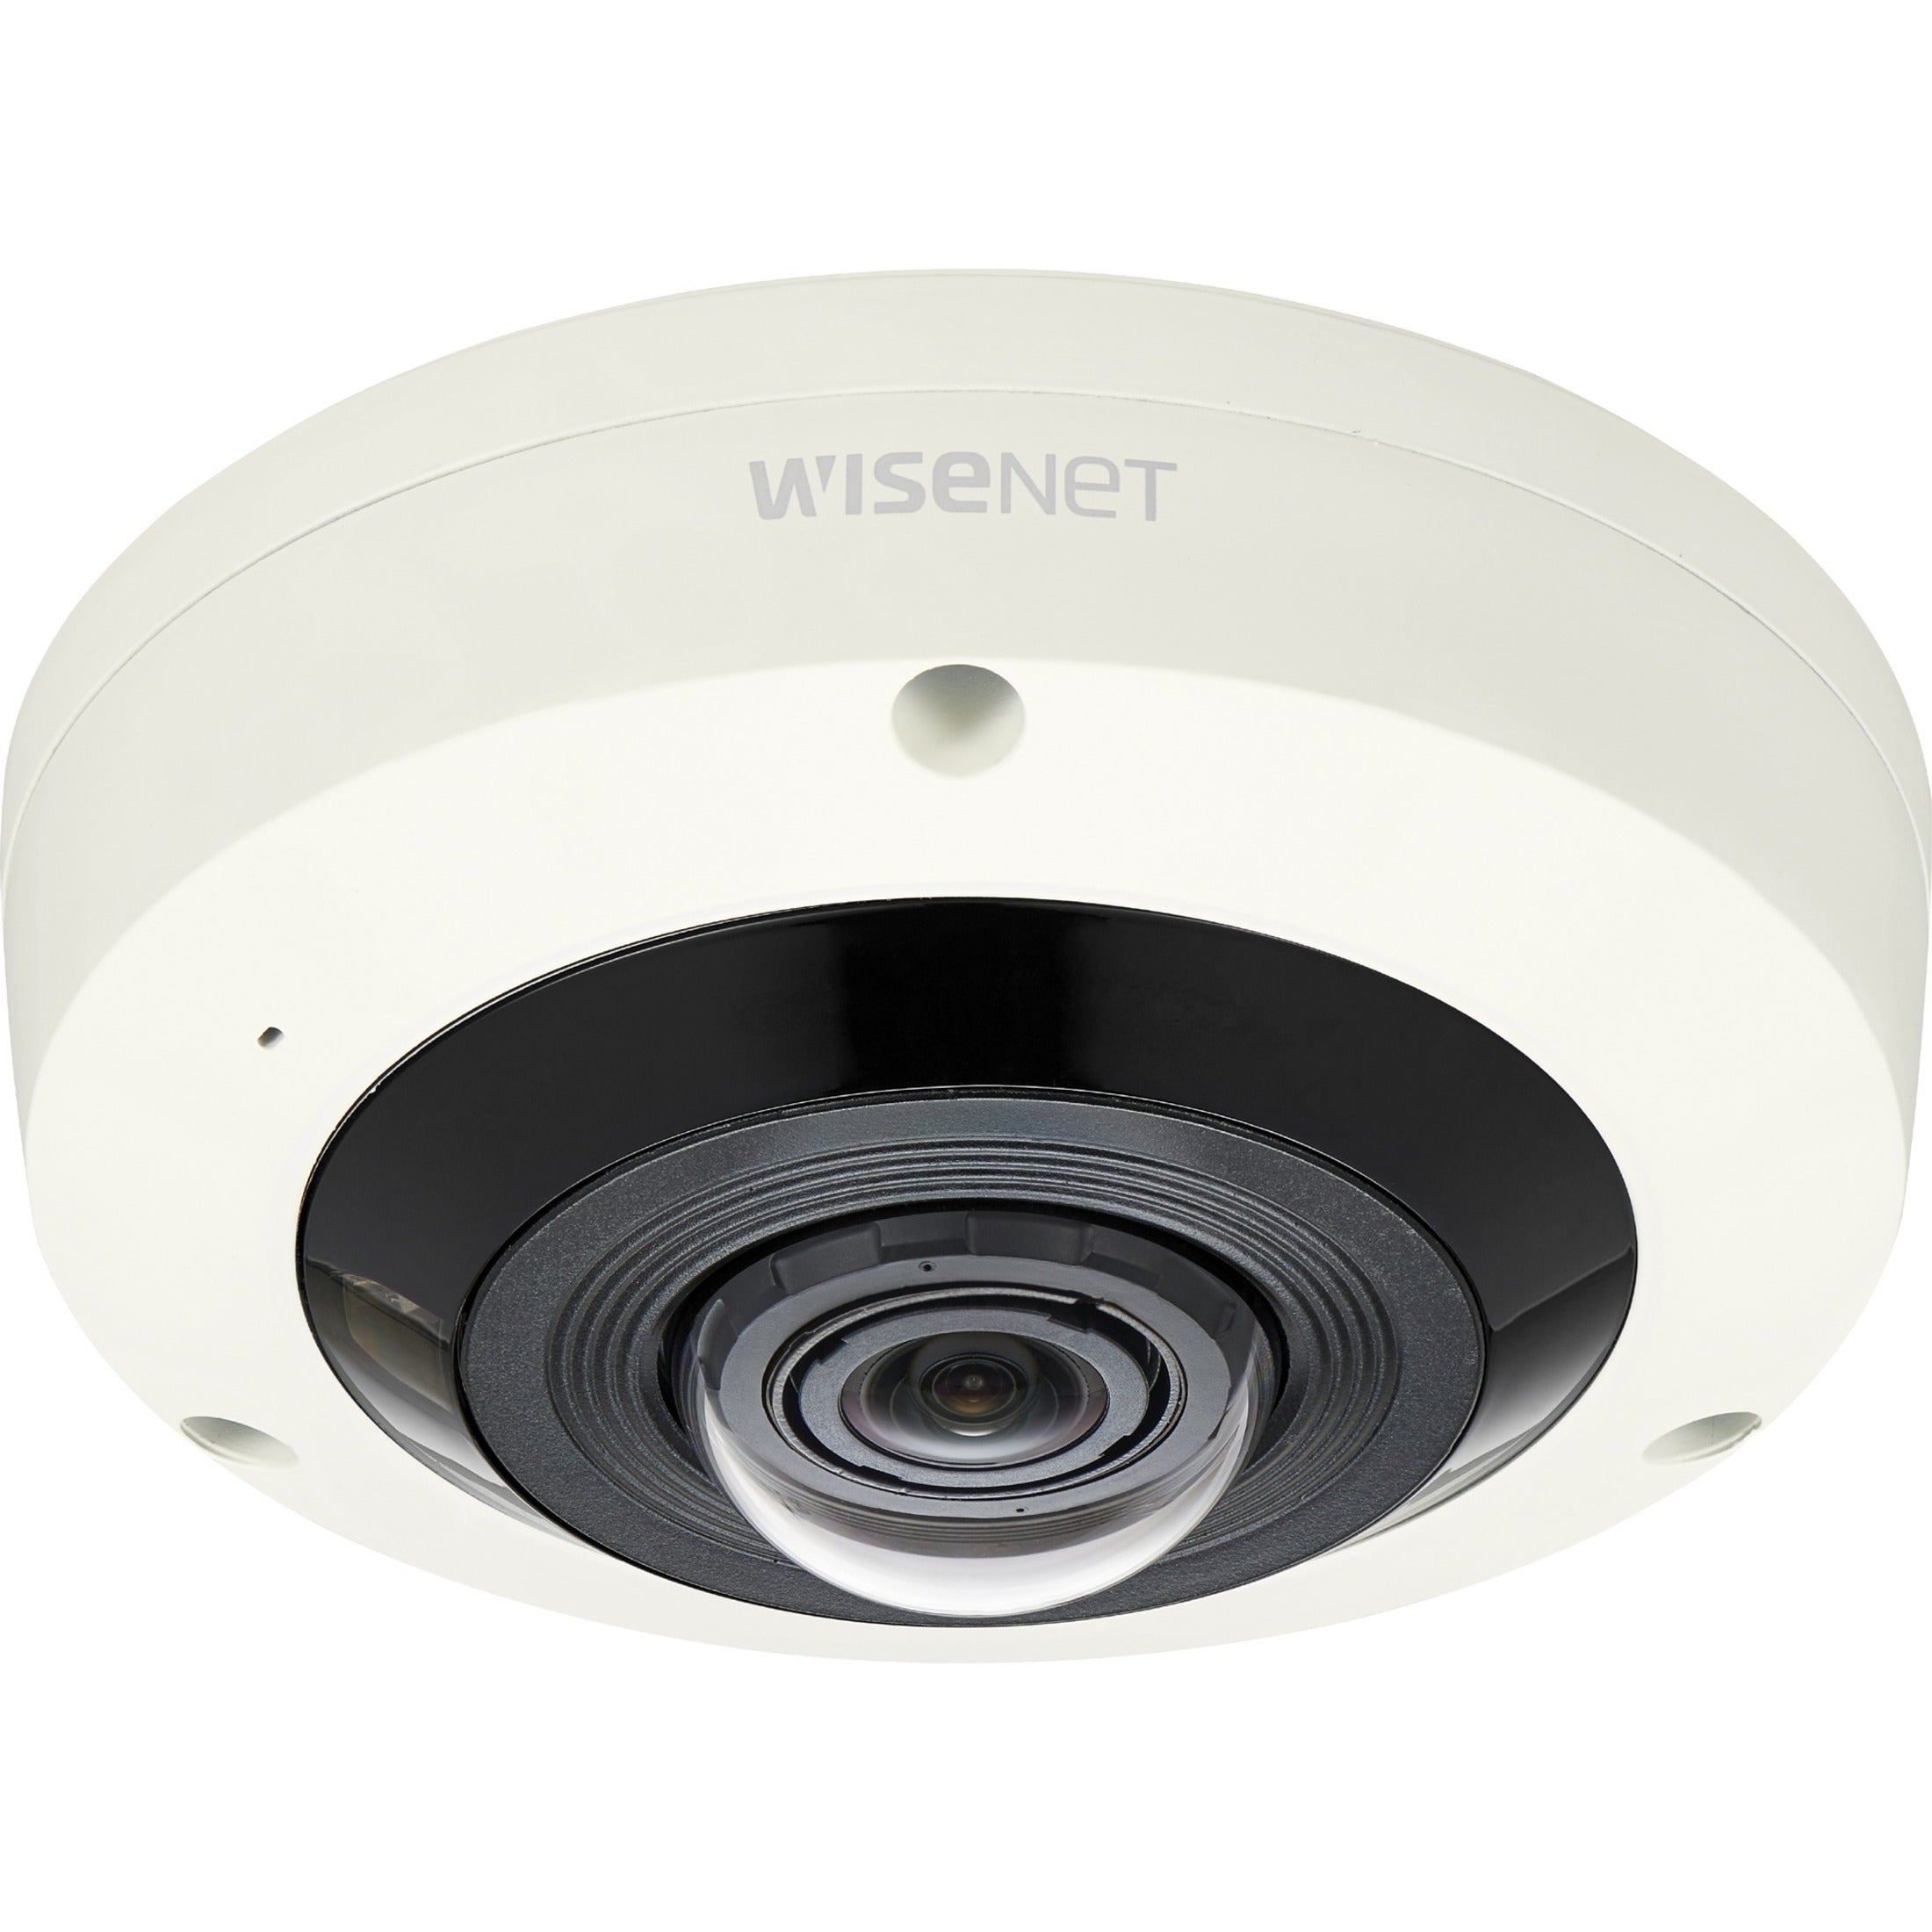 Wisenet XNF-8010RV 6MP Sensor Fisheye Camera, Outdoor Network Camera - Color - Fisheye